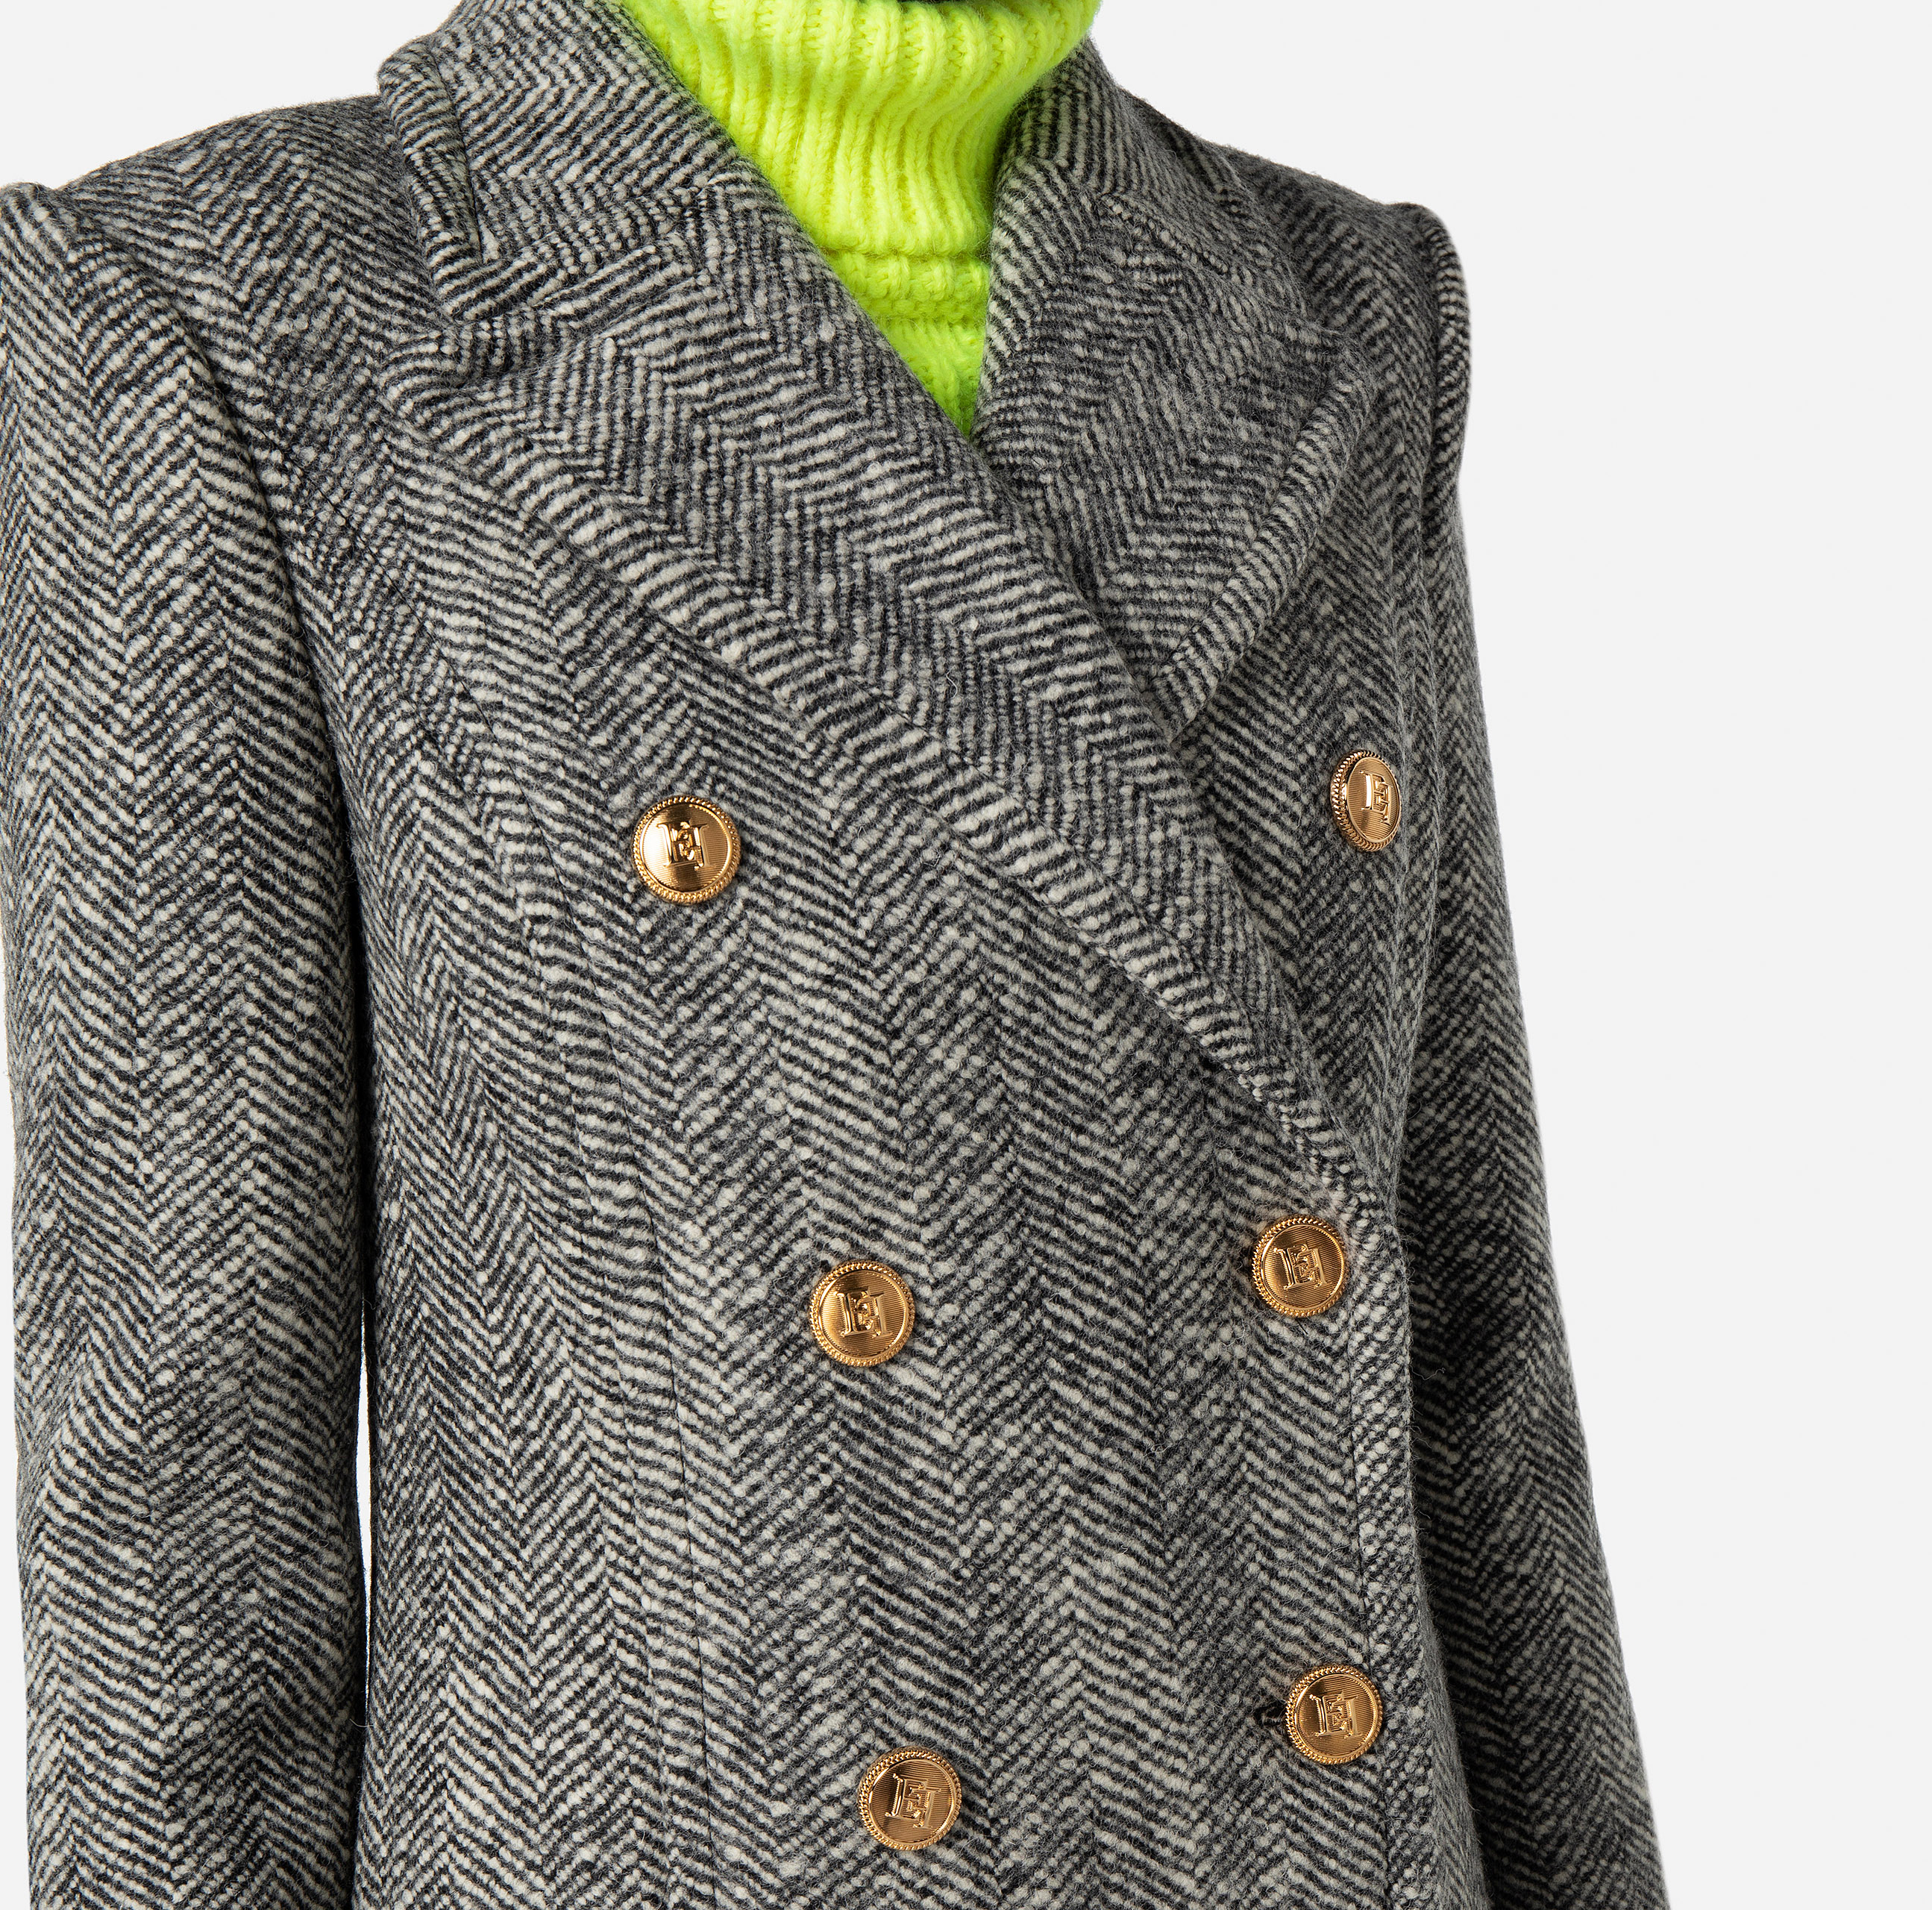 Straight-cut bouclé wool coat - Elisabetta Franchi